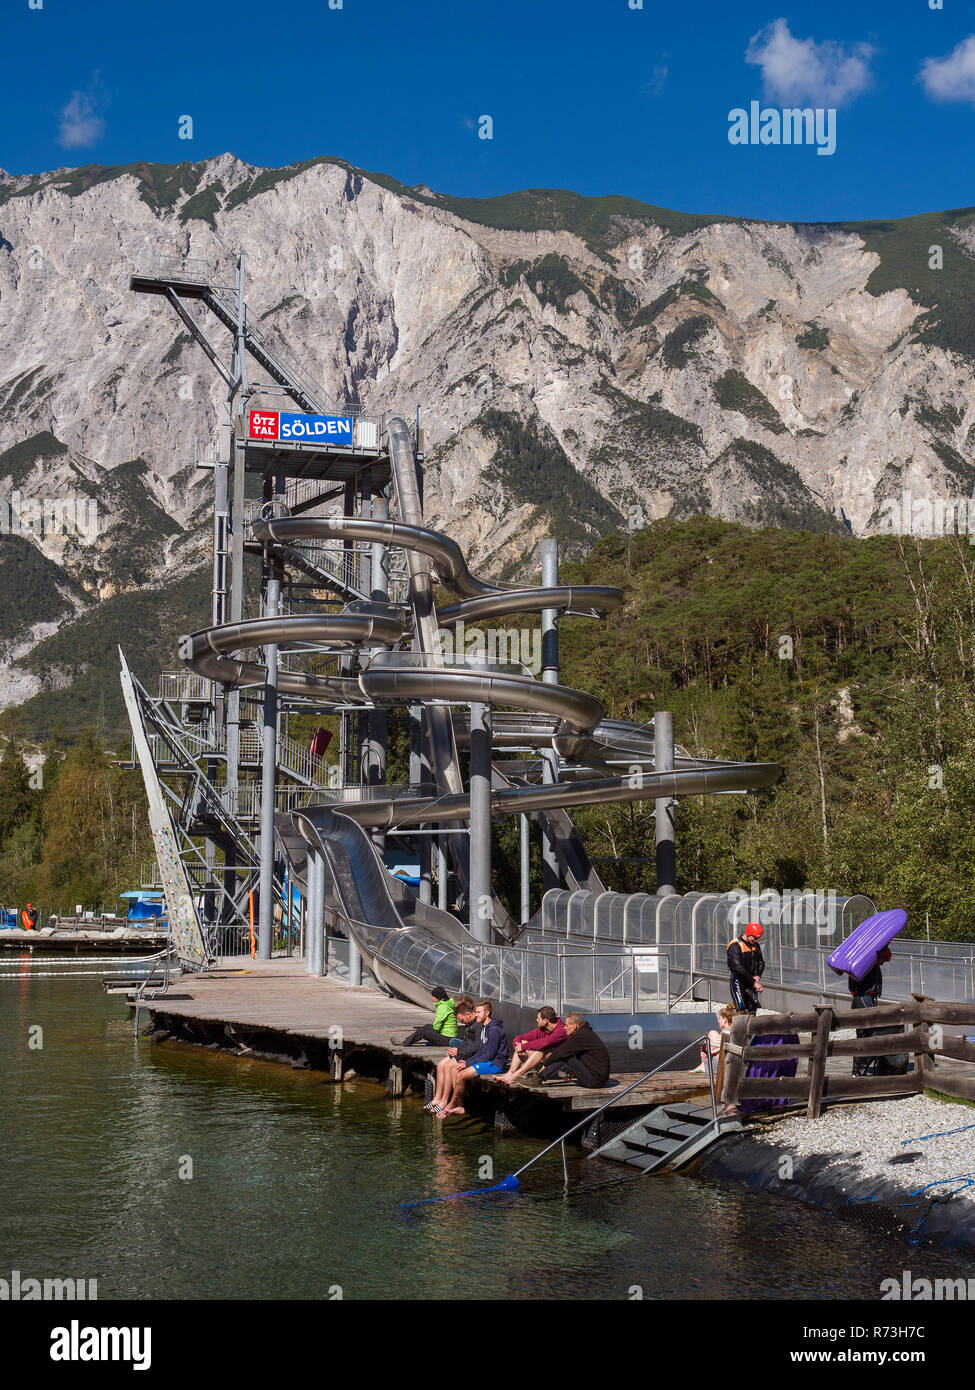 El tobogán de parque de deportes al aire libre, zona 47, Ötztal-Bahnhof, Imst, Tirol, Austria, Europa Foto de stock